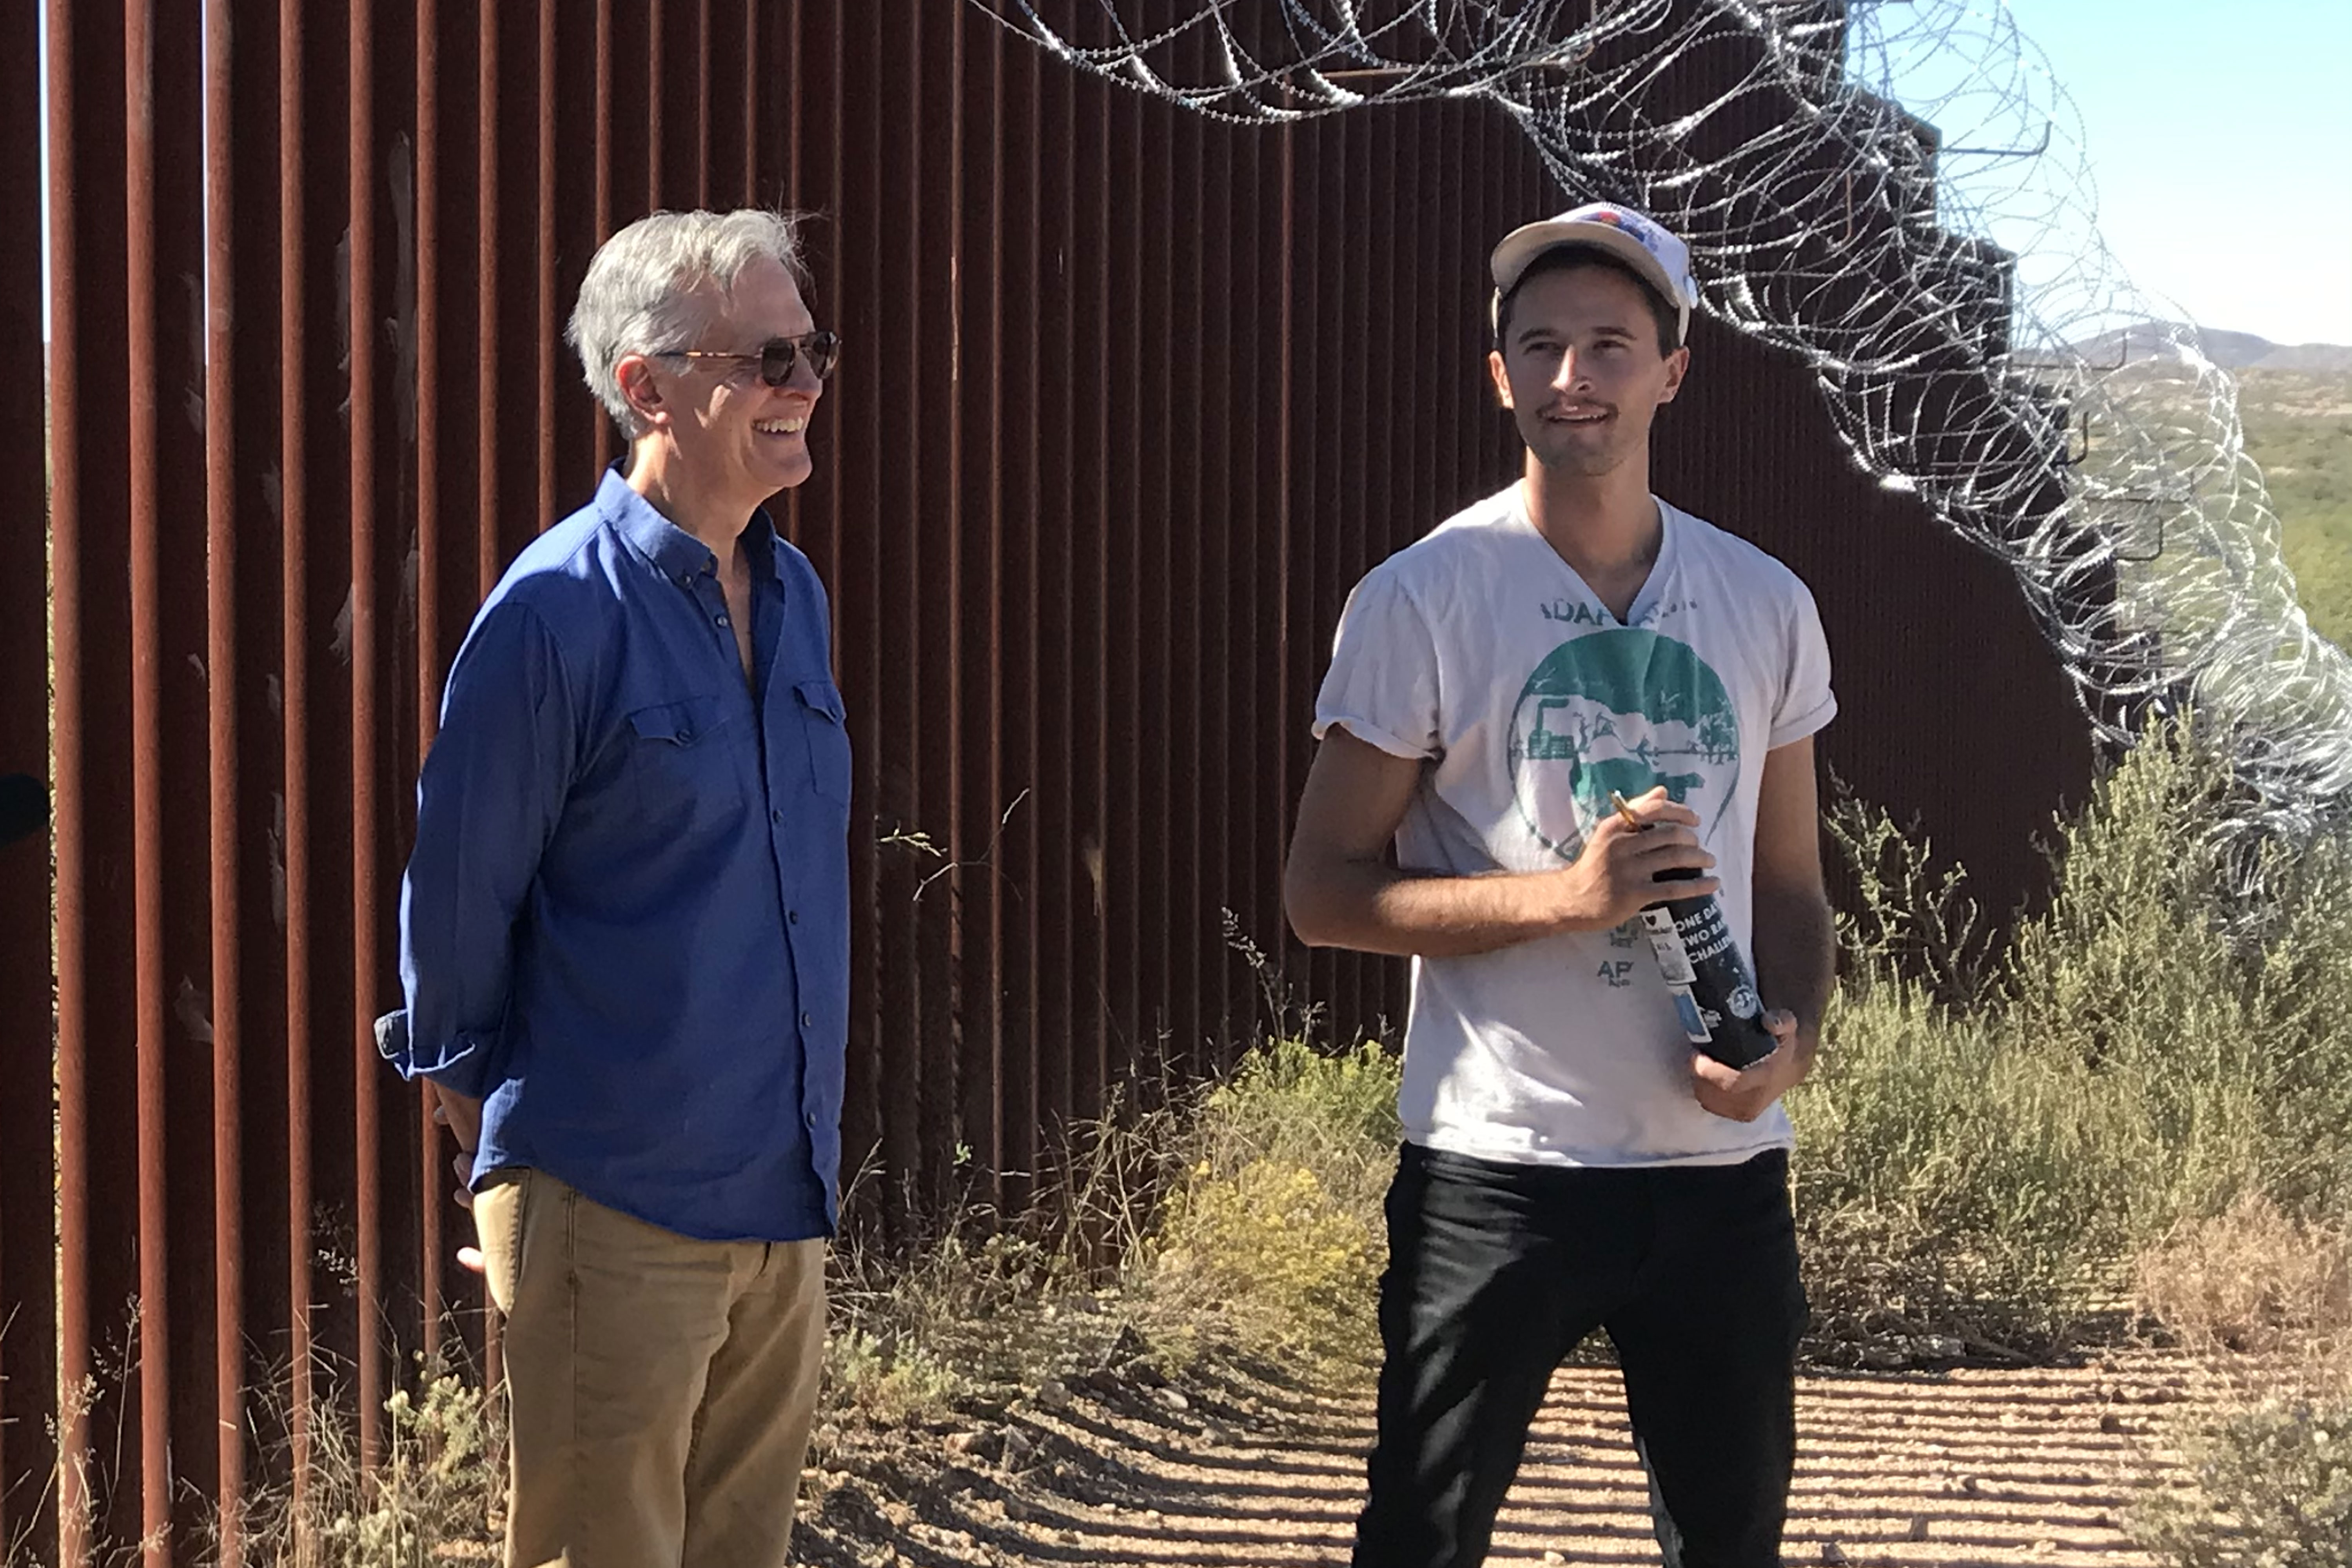 Mik Jordahl and son at US-Mexico border